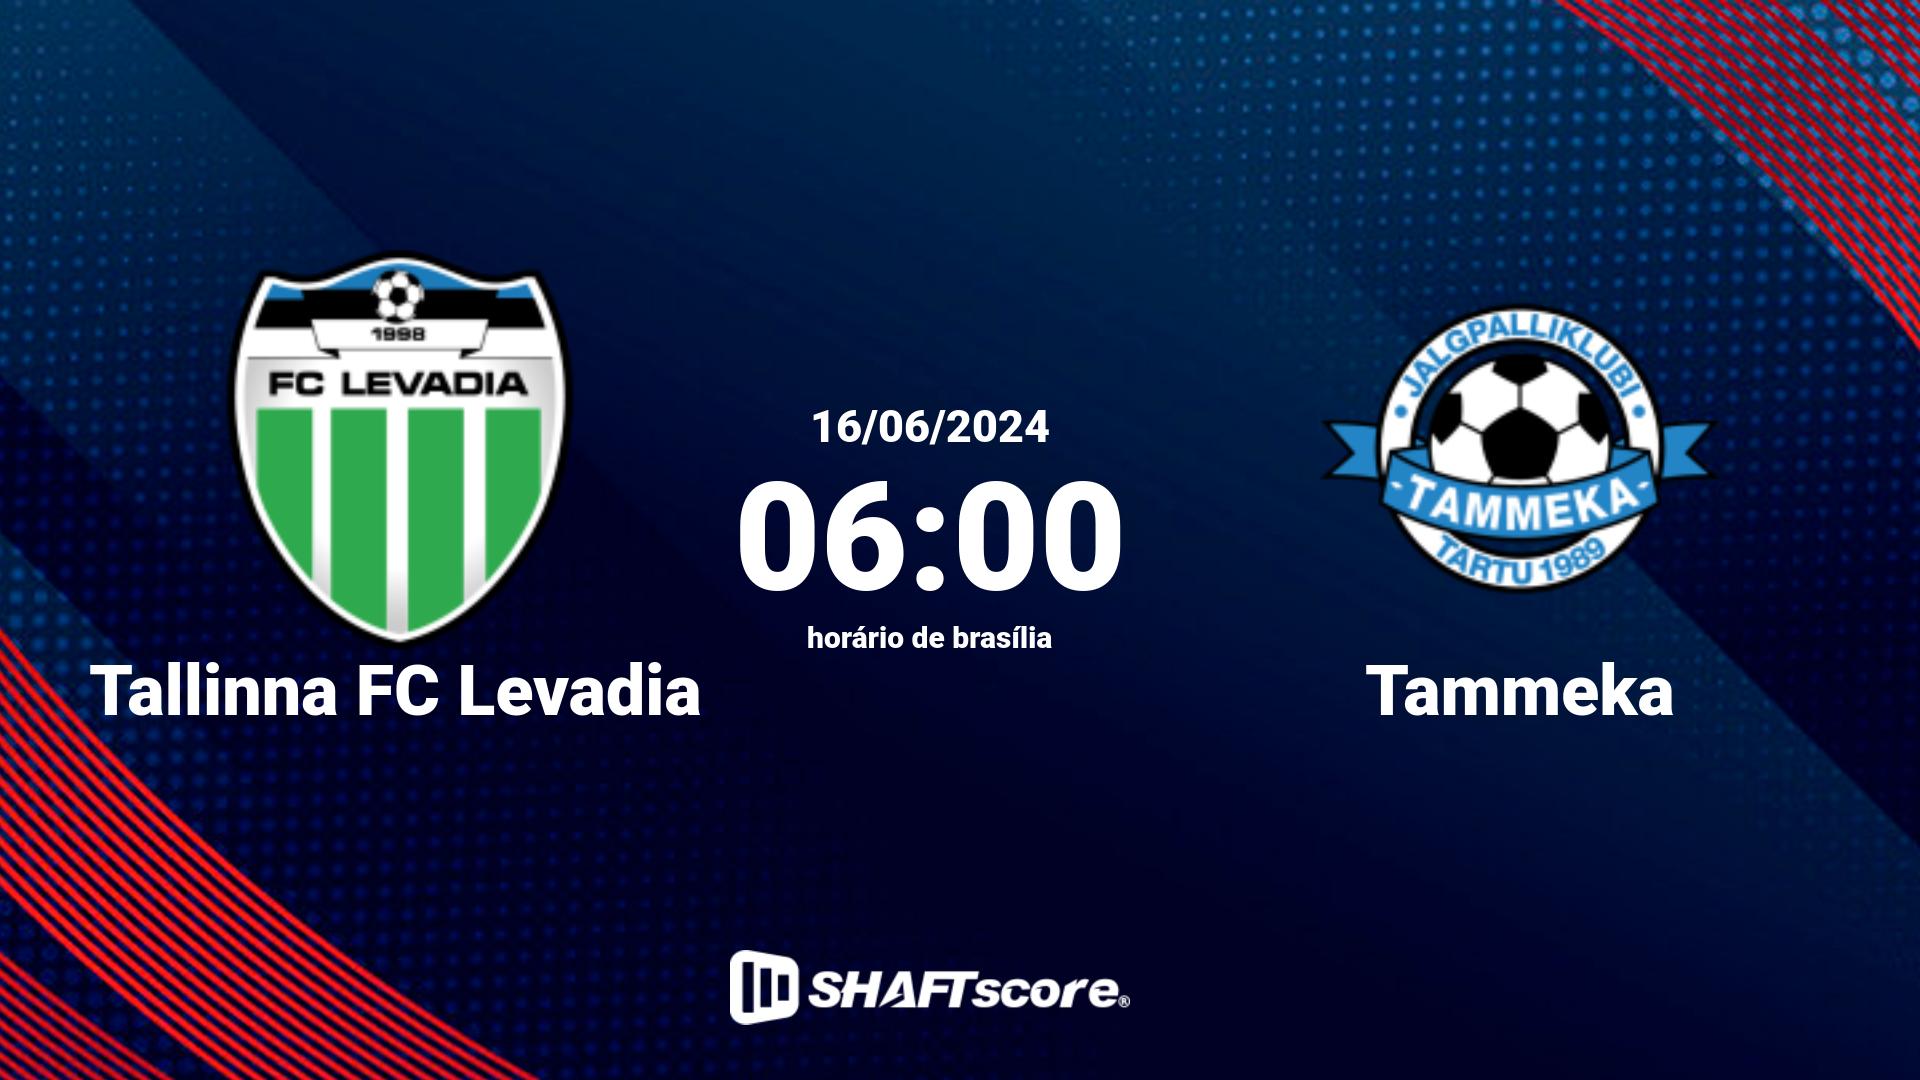 Estatísticas do jogo Tallinna FC Levadia vs Tammeka 16.06 06:00